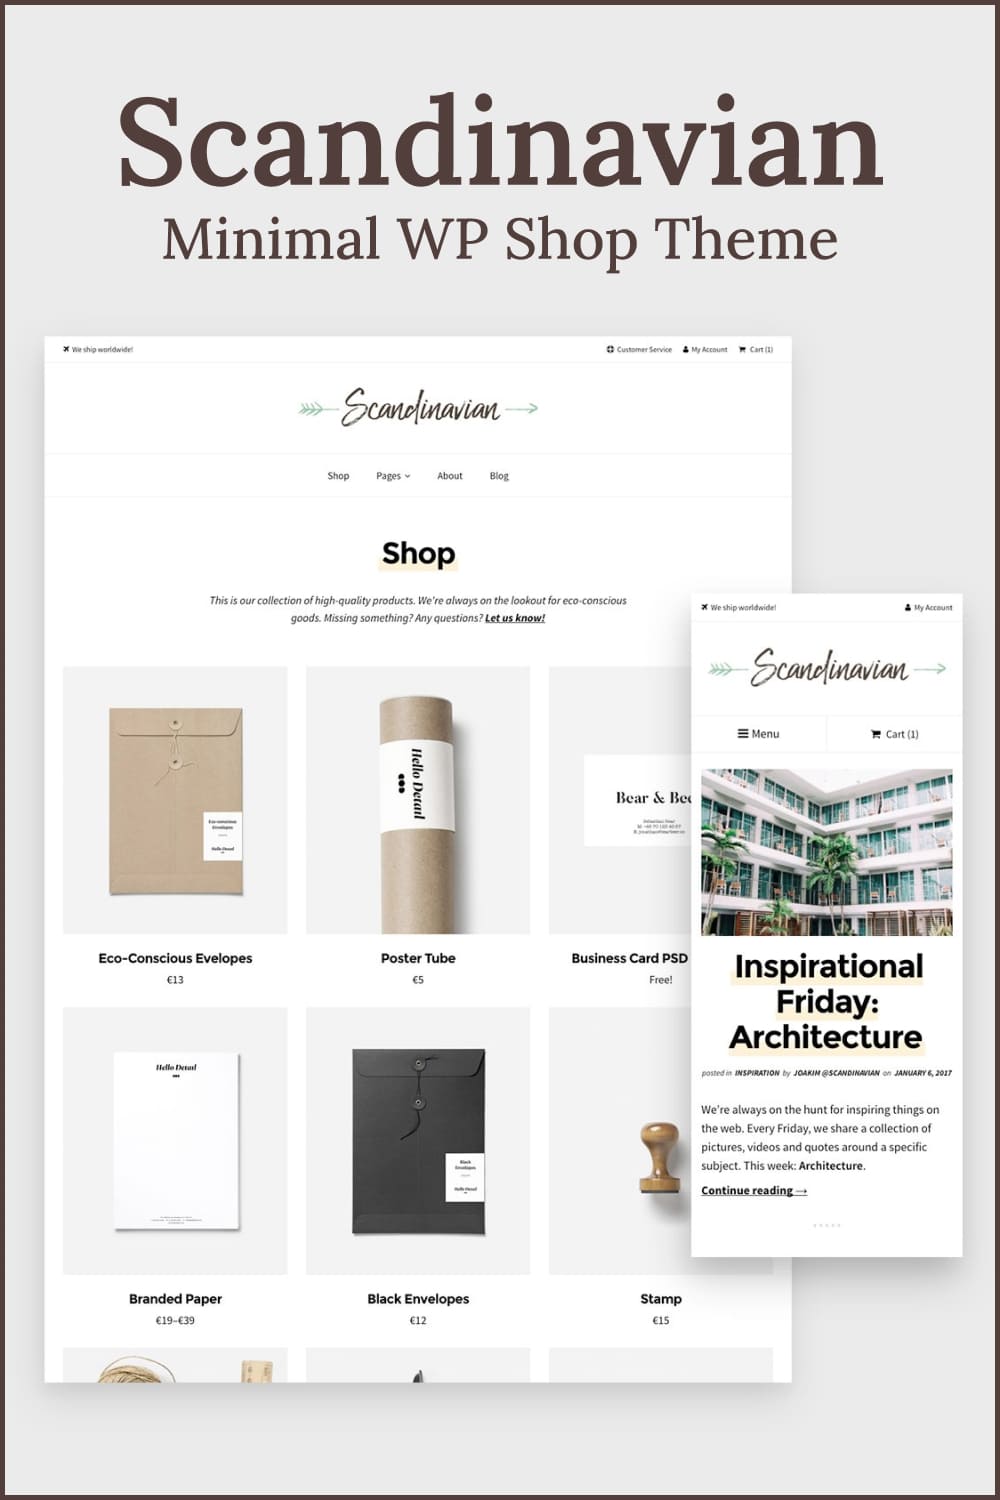 Scandinavian - Minimal WP Shop Theme - Pinterest.